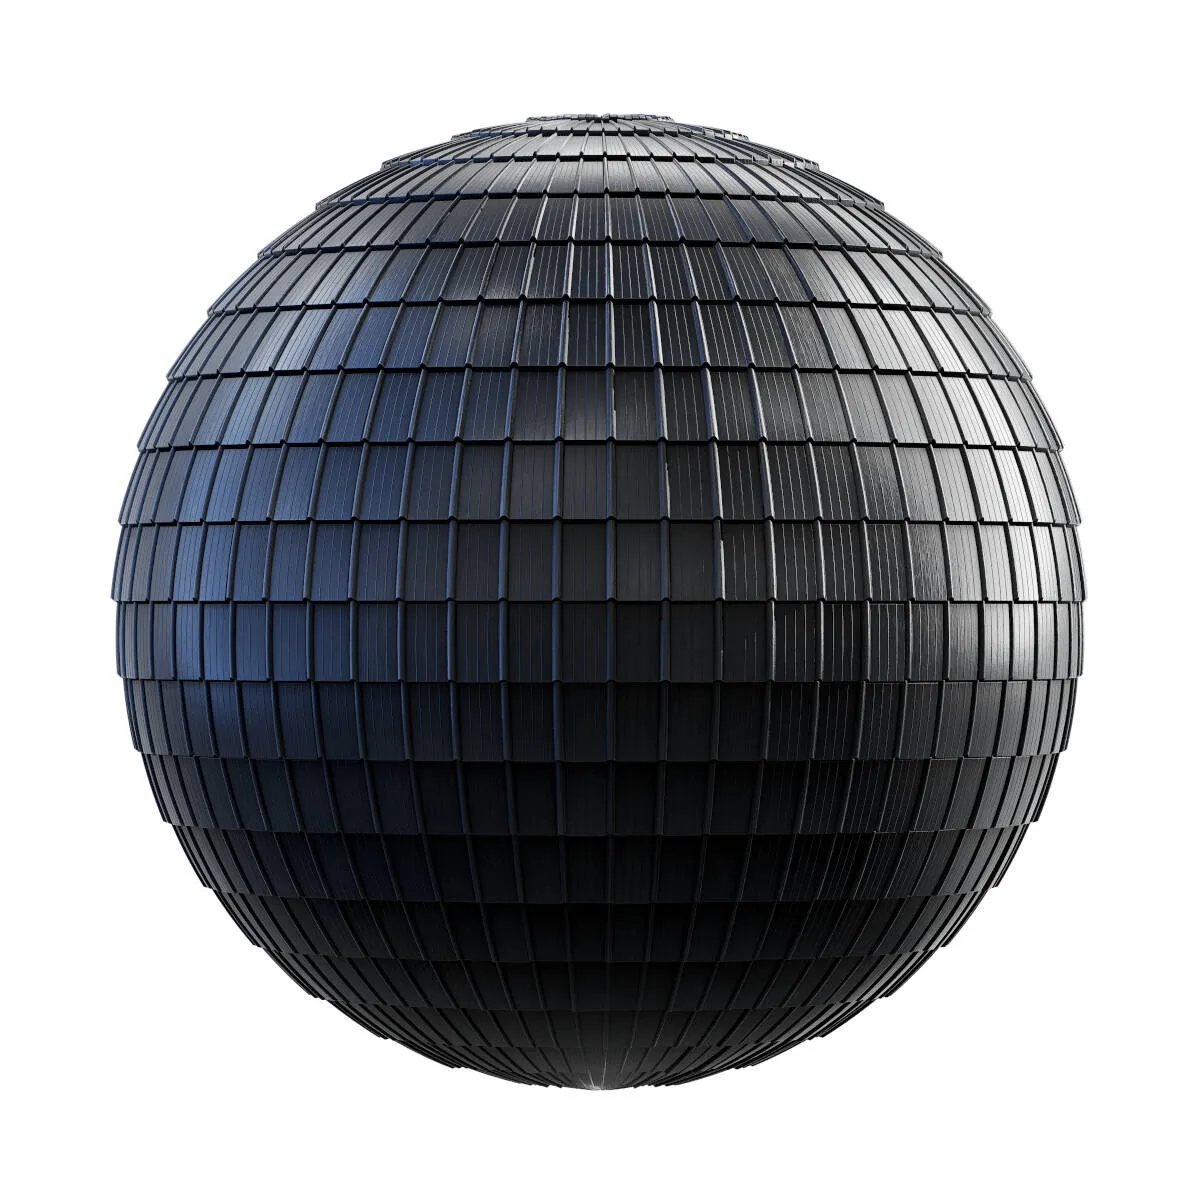 PBR Textures Volume 35 – Roofs – 4K – black_steel_tile_roof_35_51